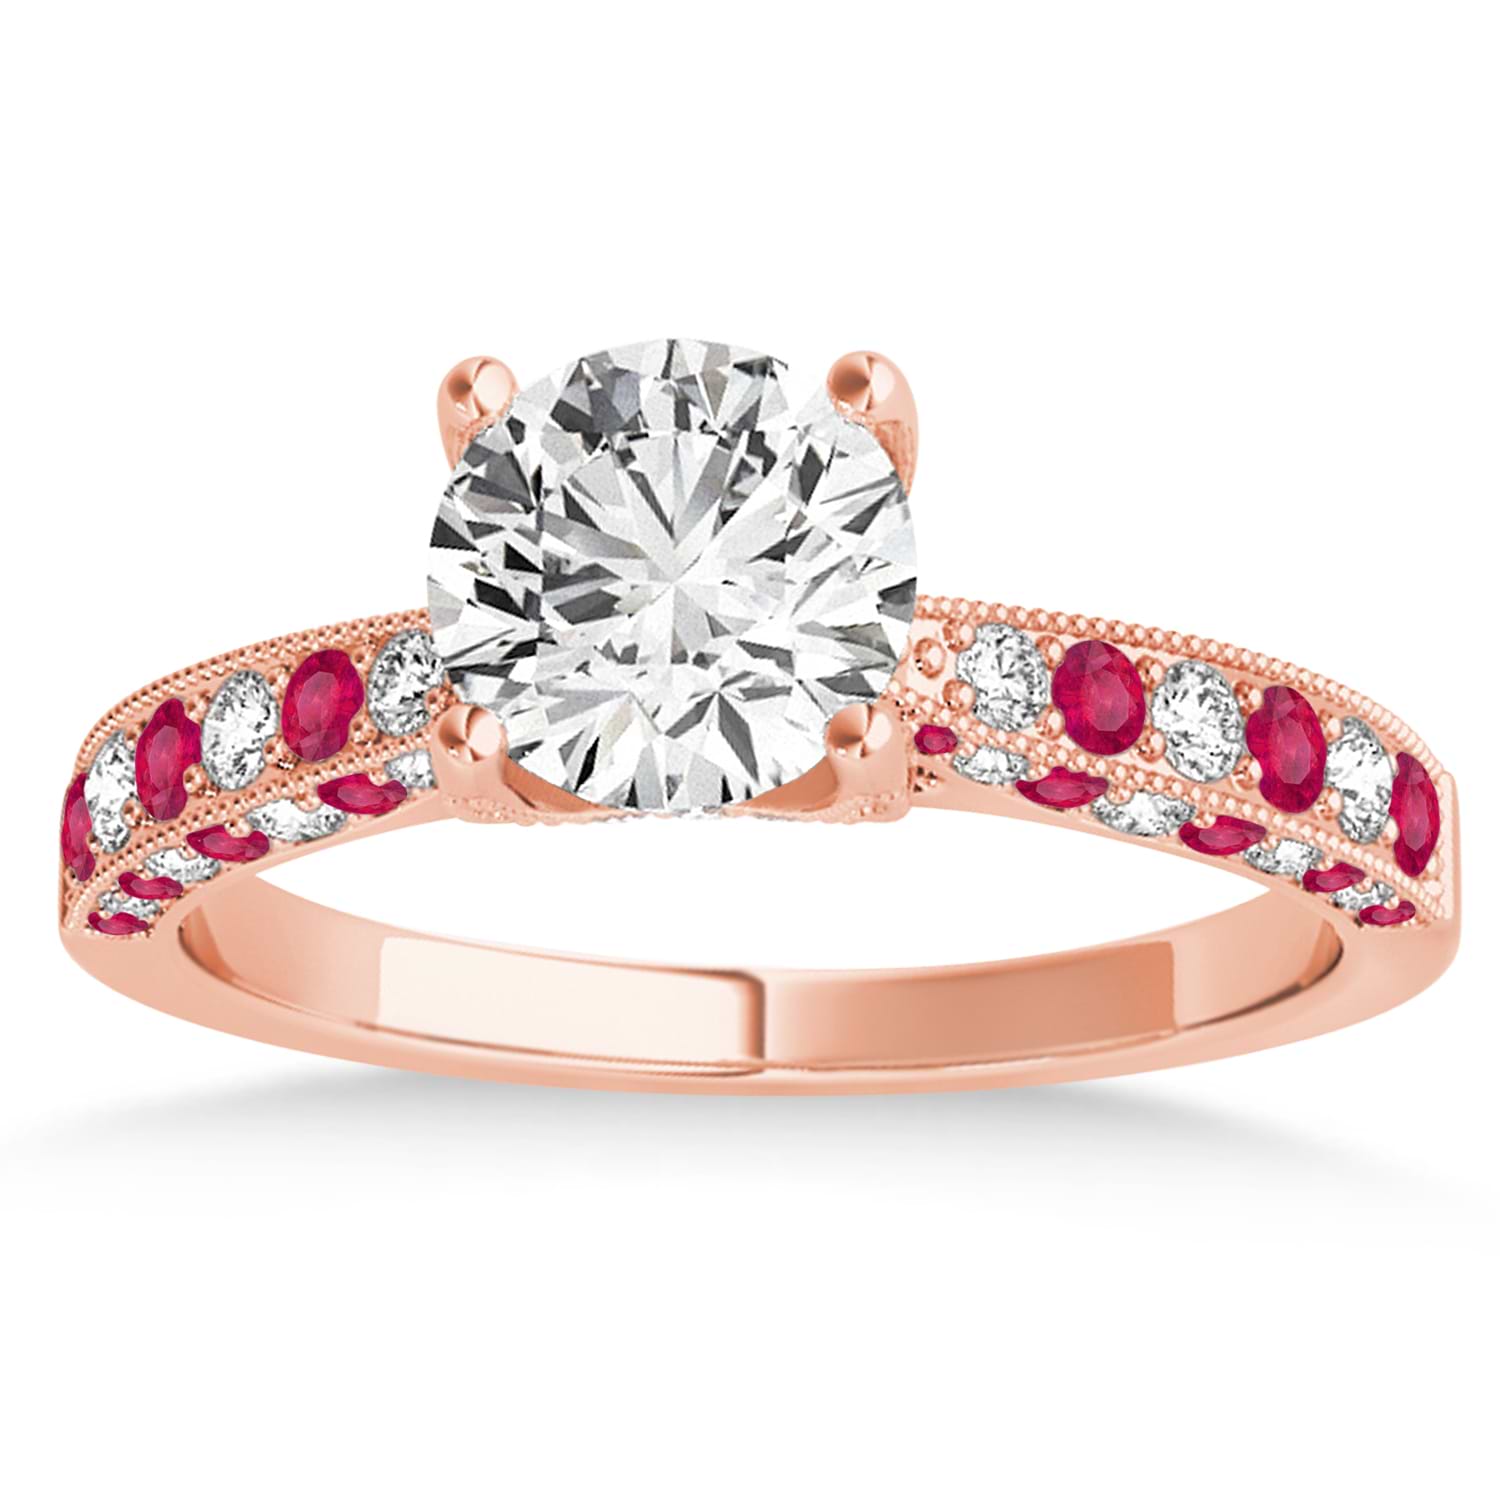 Alternating Diamond & Ruby Engravable Engagement Ring in 18k Rose Gold (0.45ct)